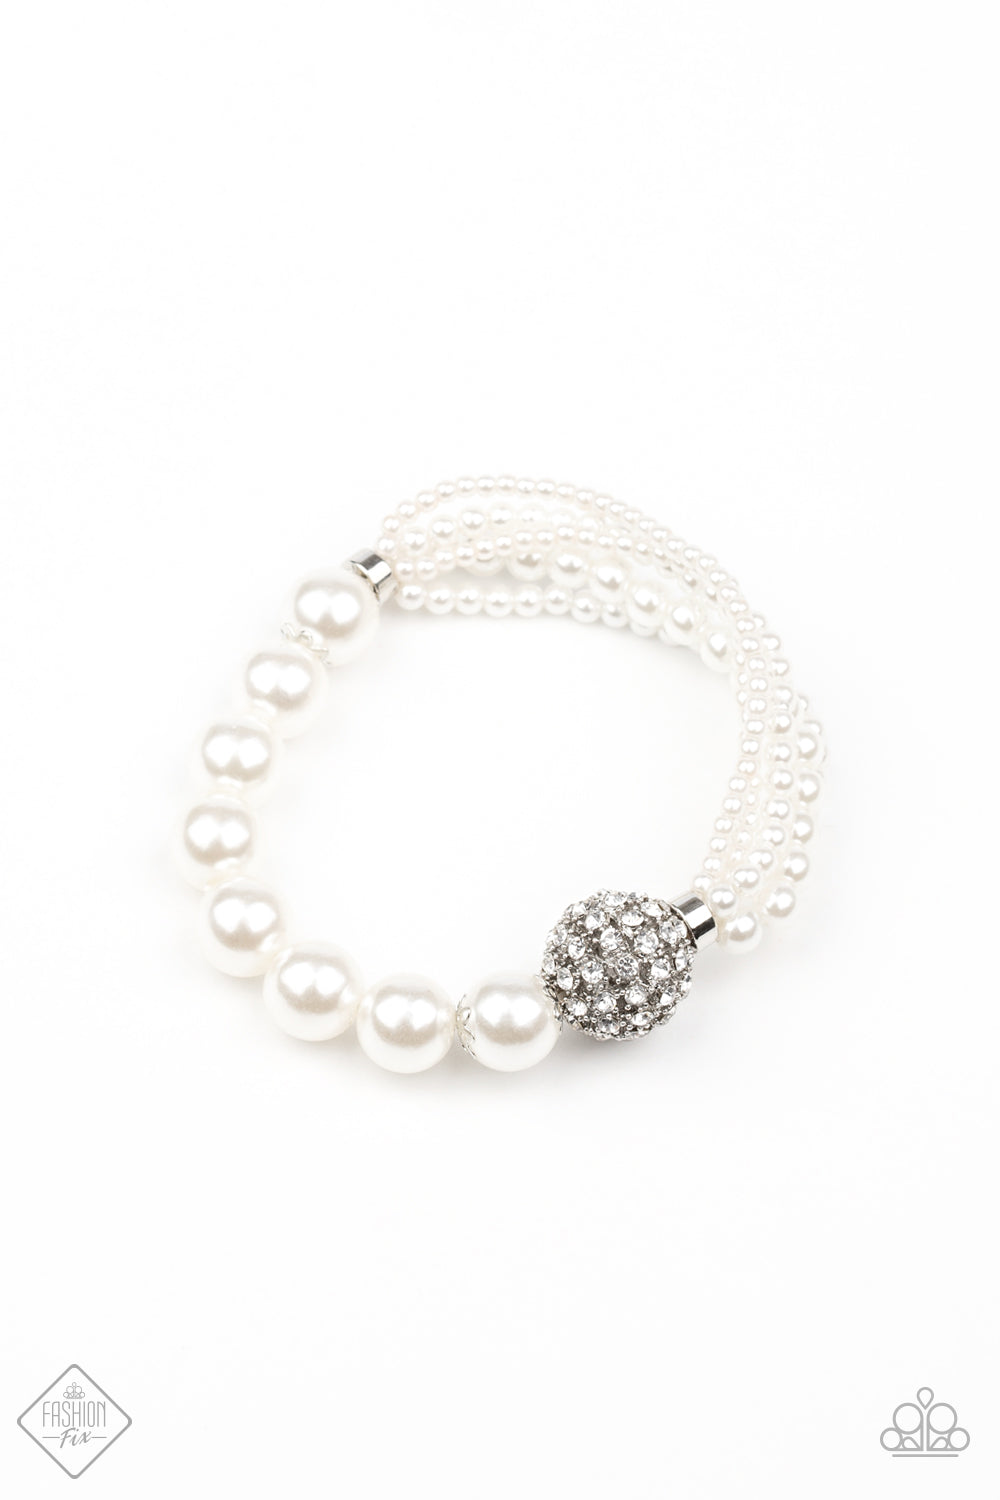 Show Them The DIOR - White pearl bracelet